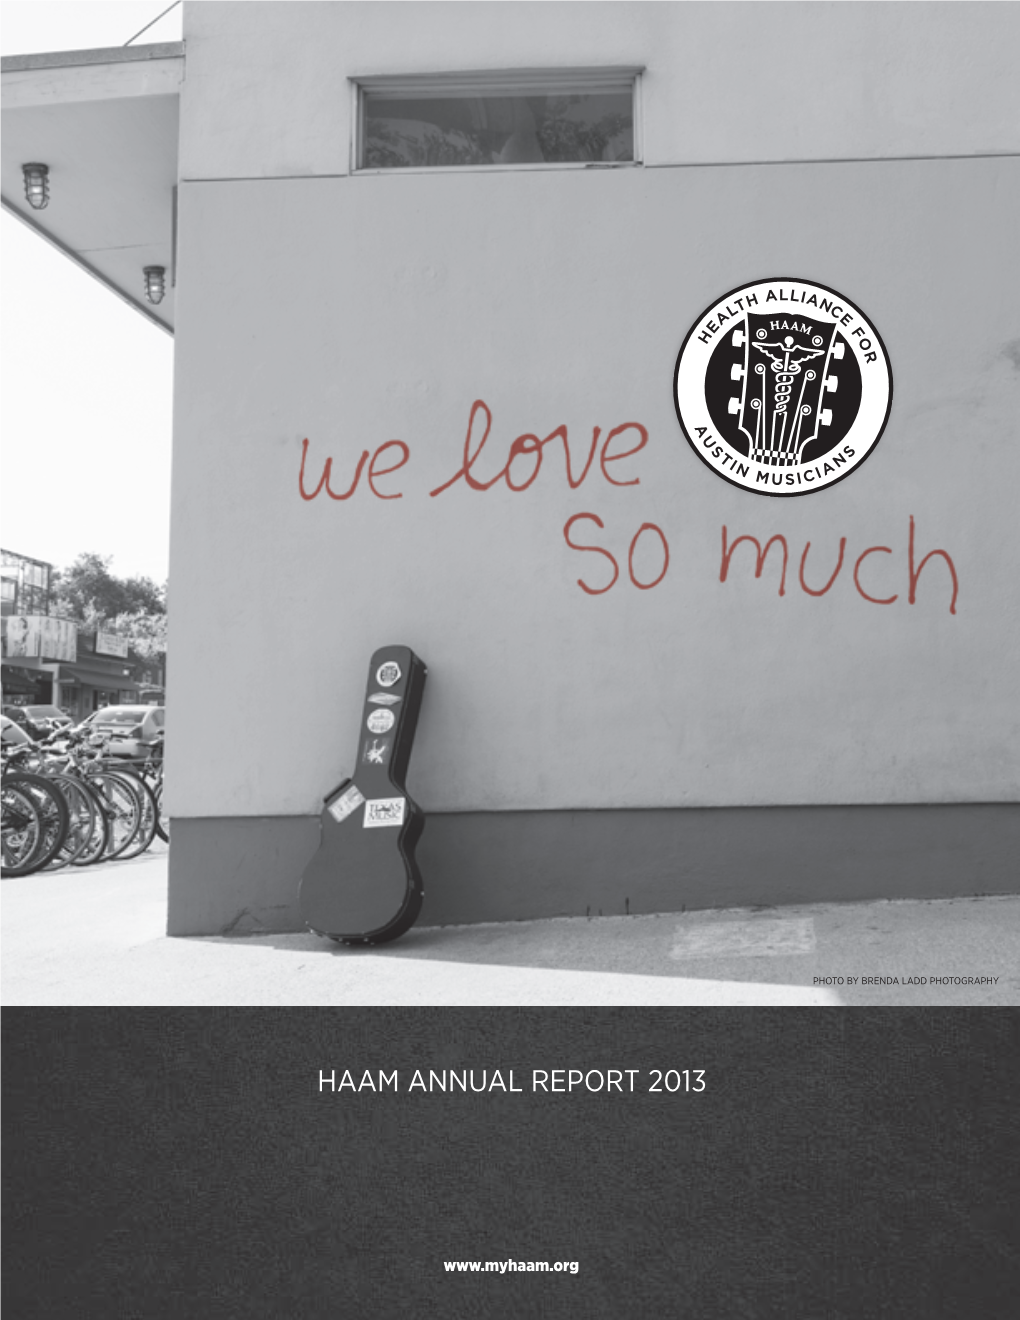 Haam Annual Report 2013